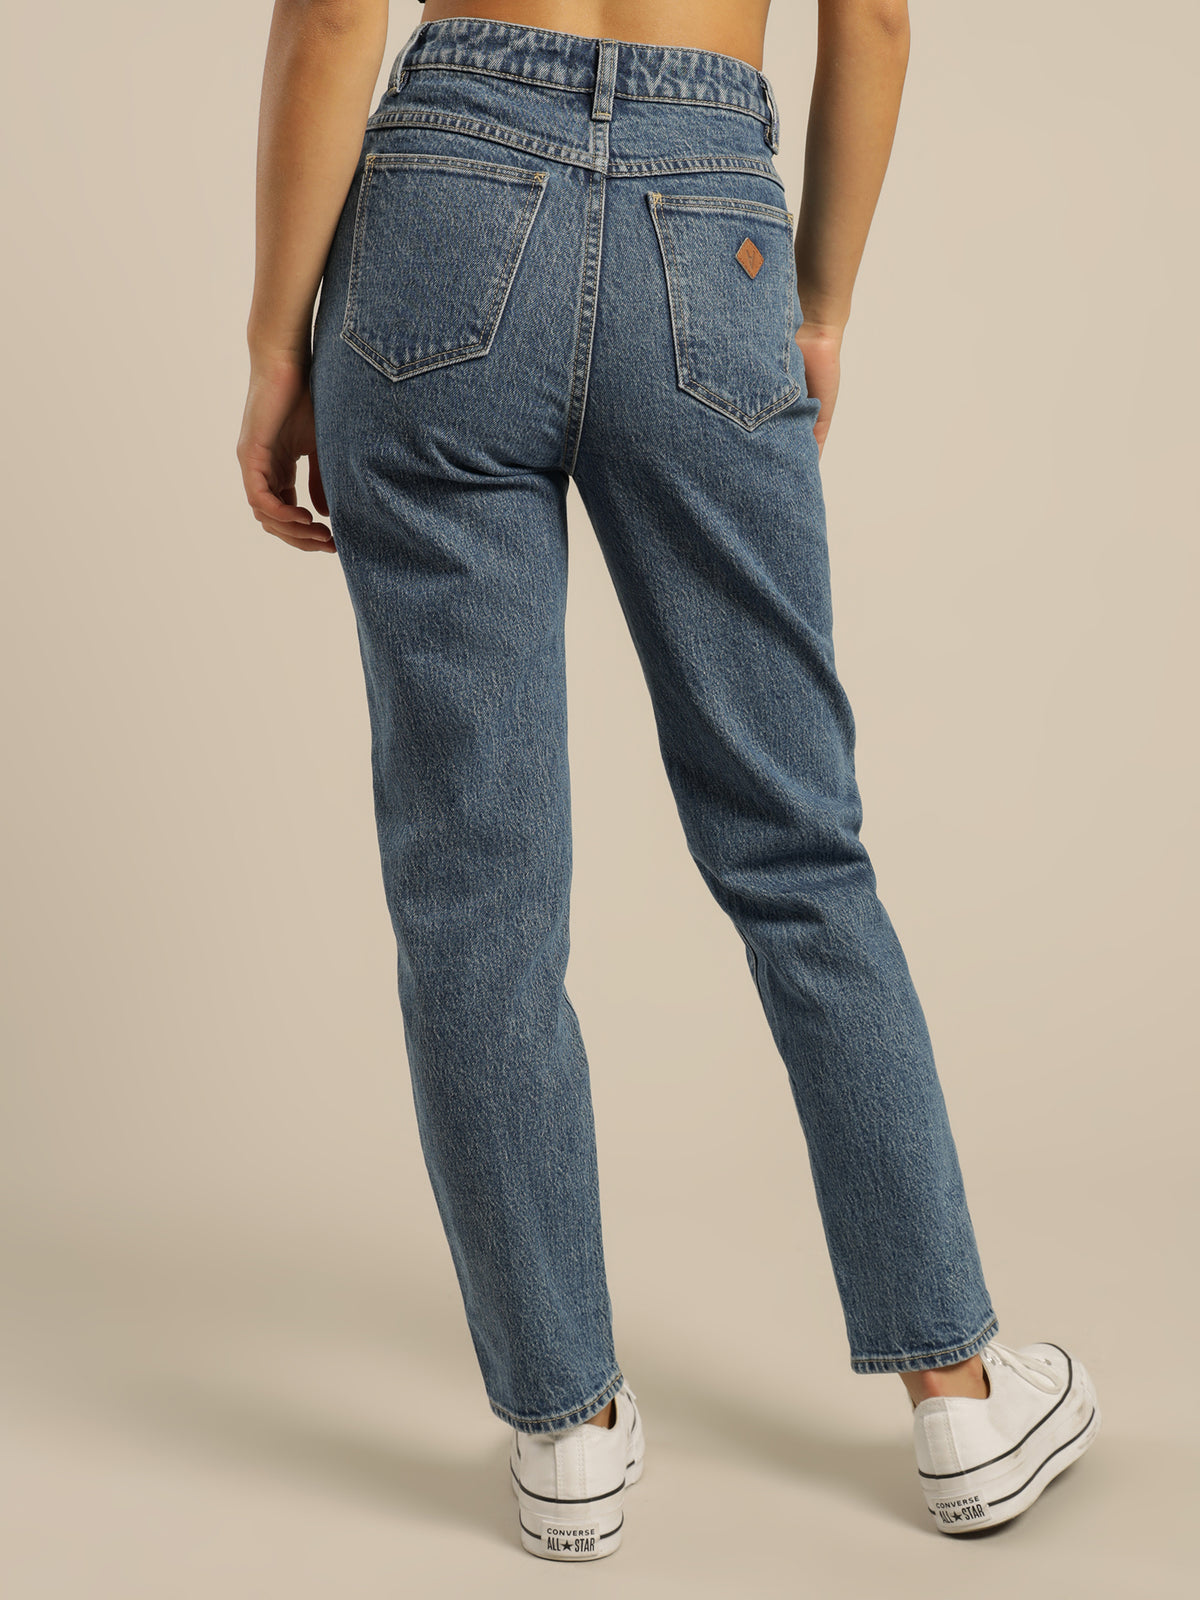 A 94 High Slim Jean in Chantell Organic